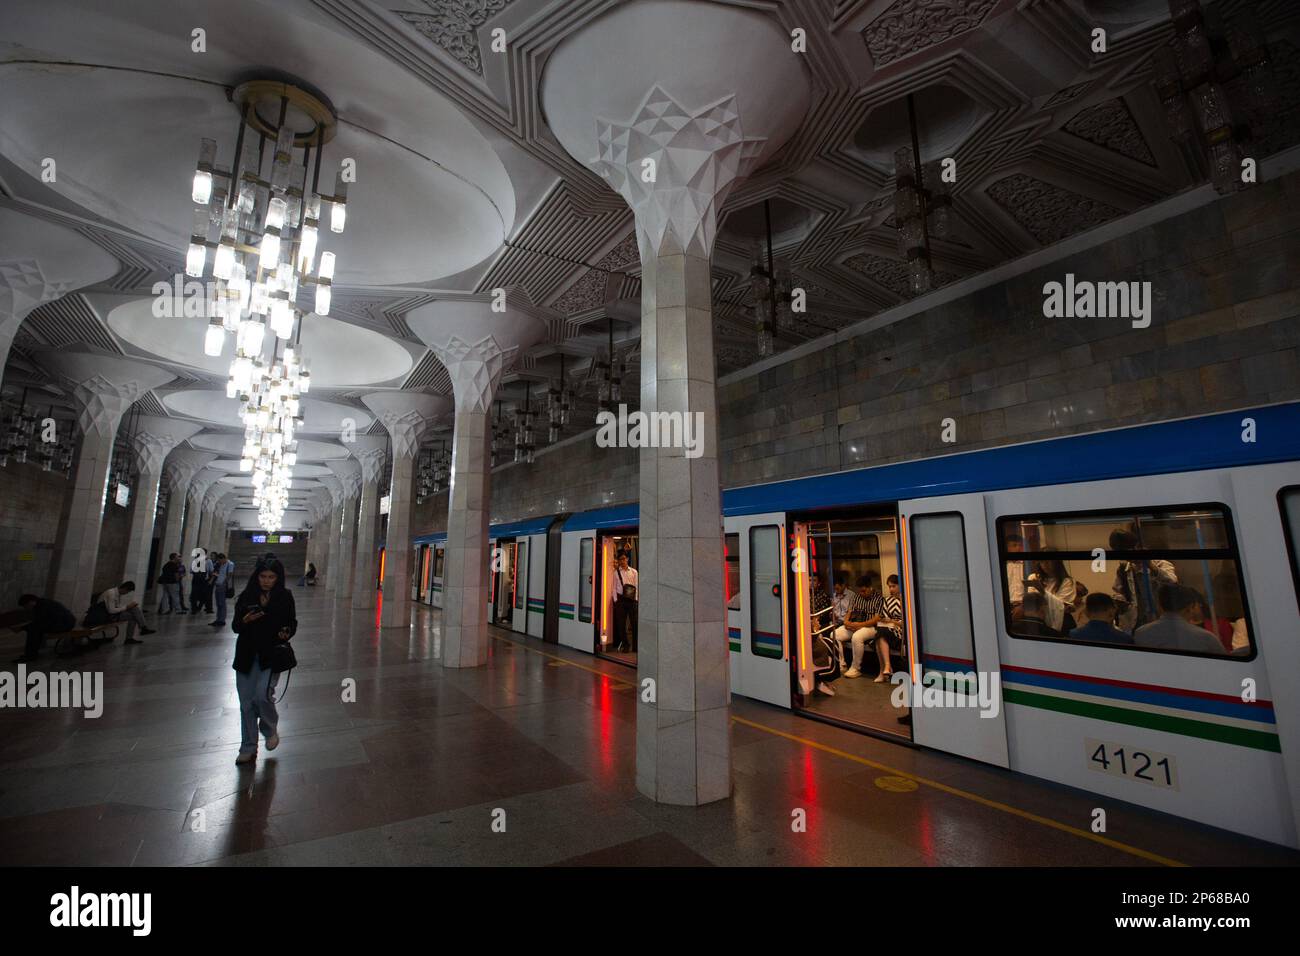 Mustakillik Station, métro Tashkent, Tashkent, Ouzbékistan, Asie centrale, Asie Banque D'Images